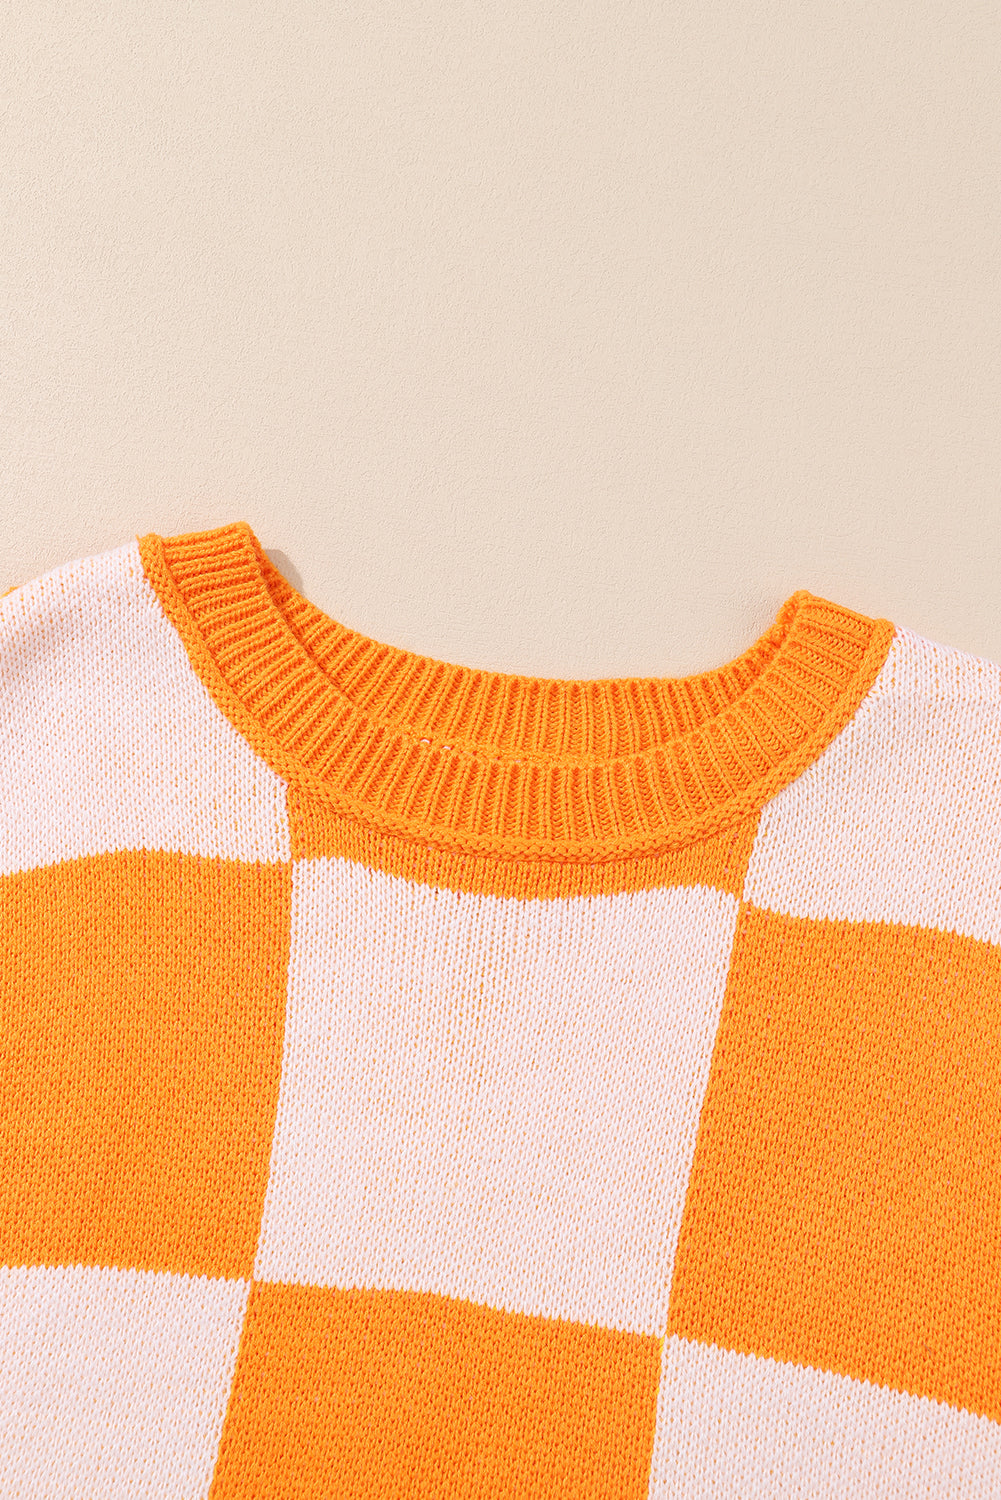 Orange Checkered Bishop Sleeve Sweater